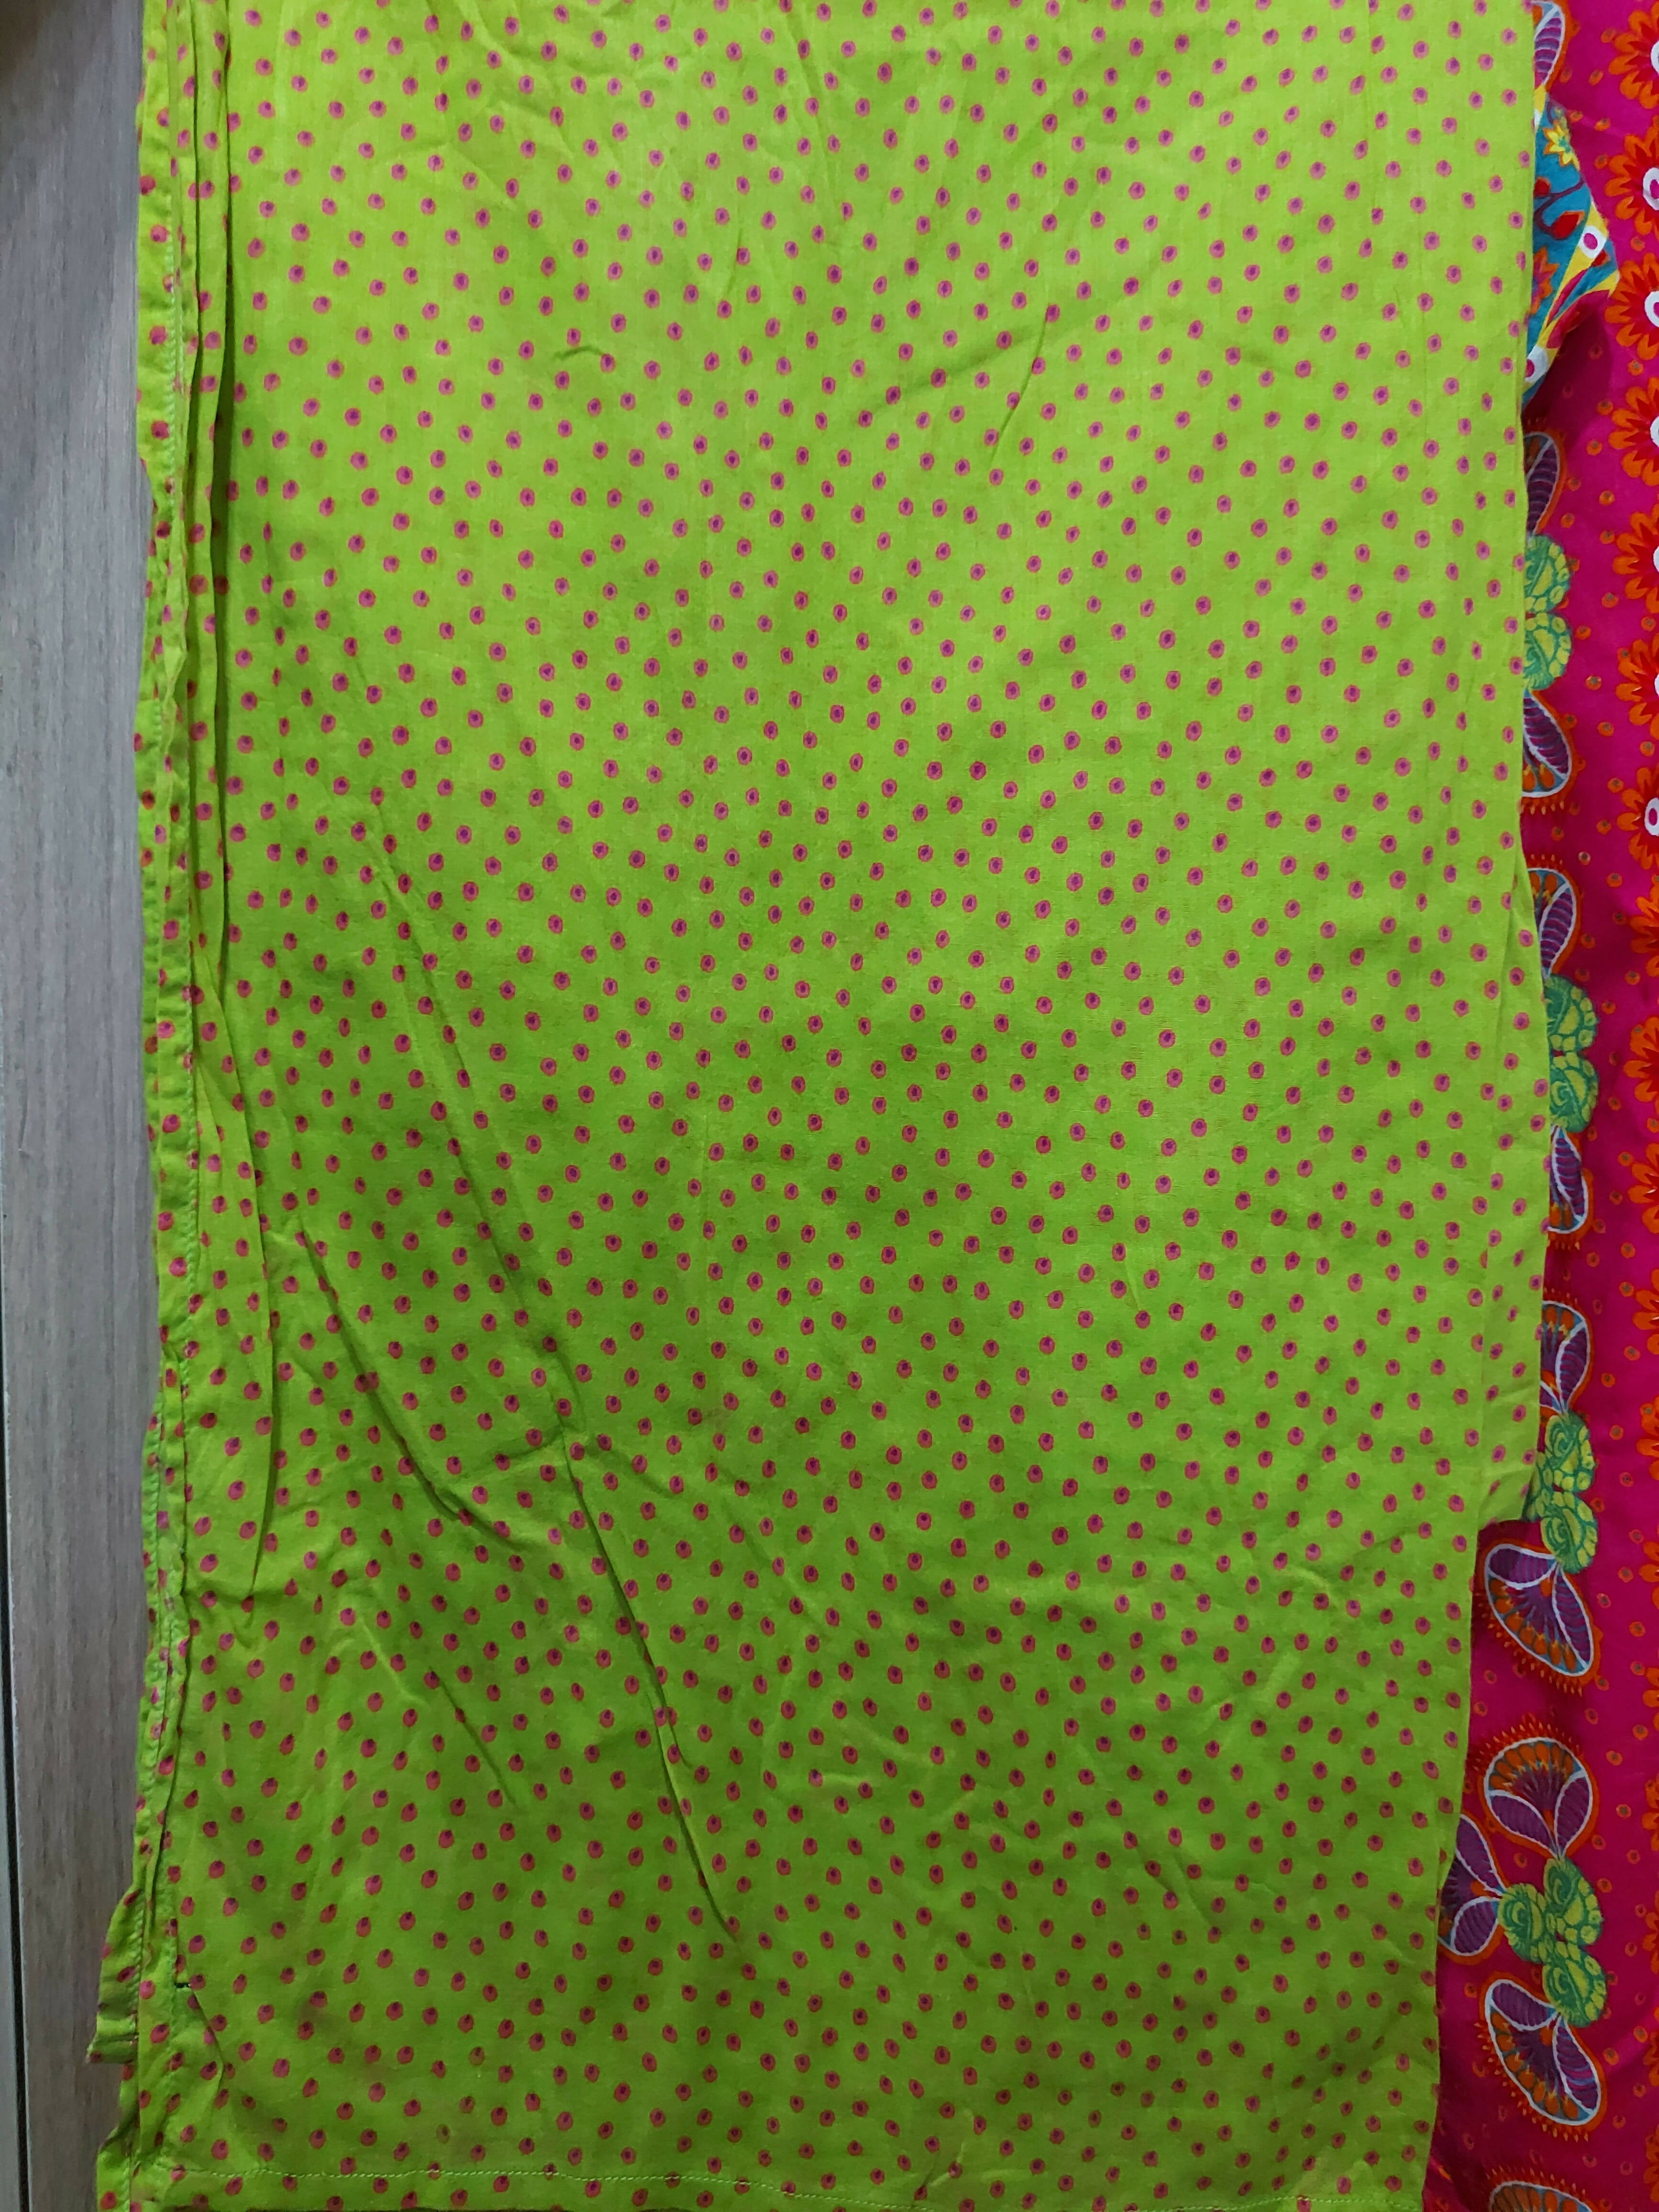 Generation | Pink & Green Colour 2 pc Suit (size 12 )| Women Branded Kurta | Preloved